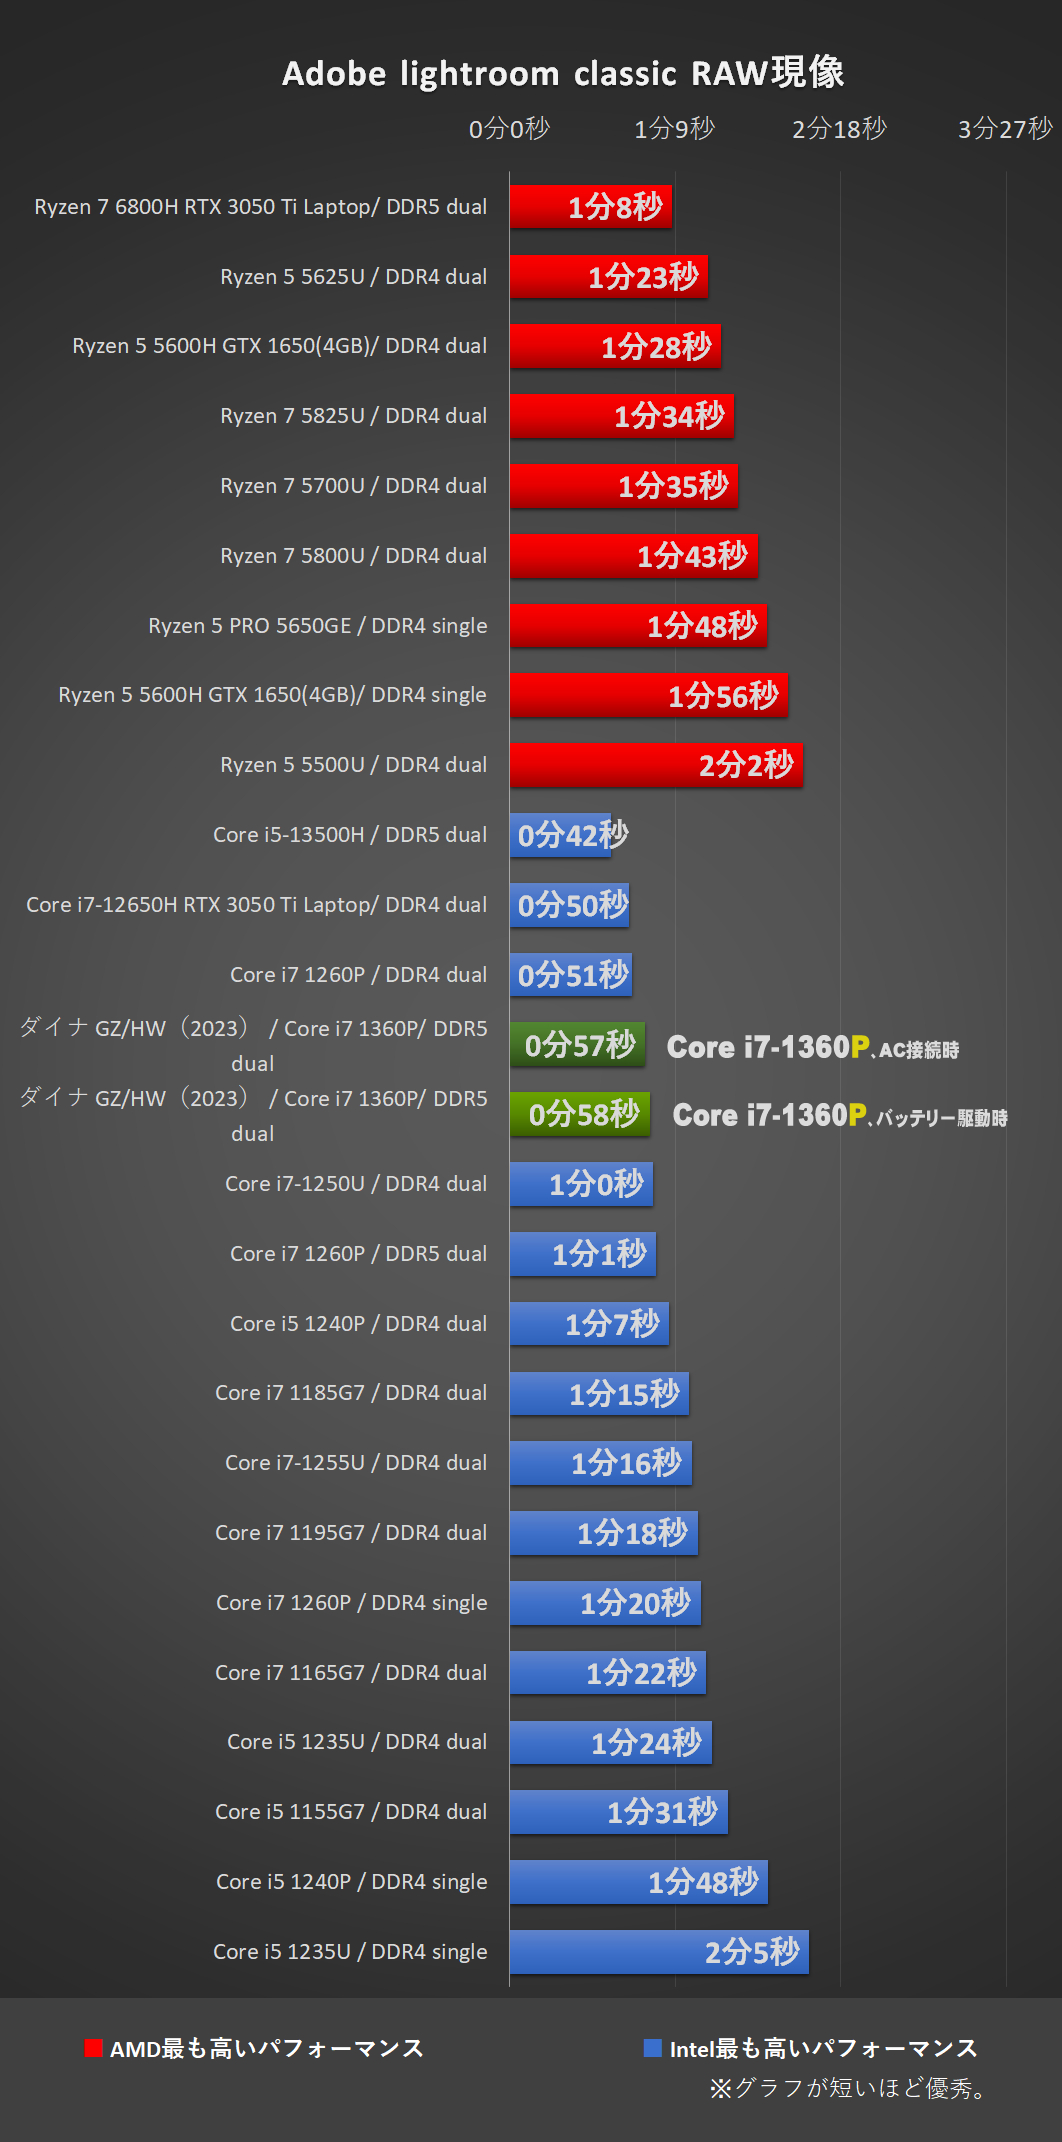 「dynabook GZ/HW（2023）」Core i7-1360Pにて、Adobe-Lightroom classic 処理時間比較